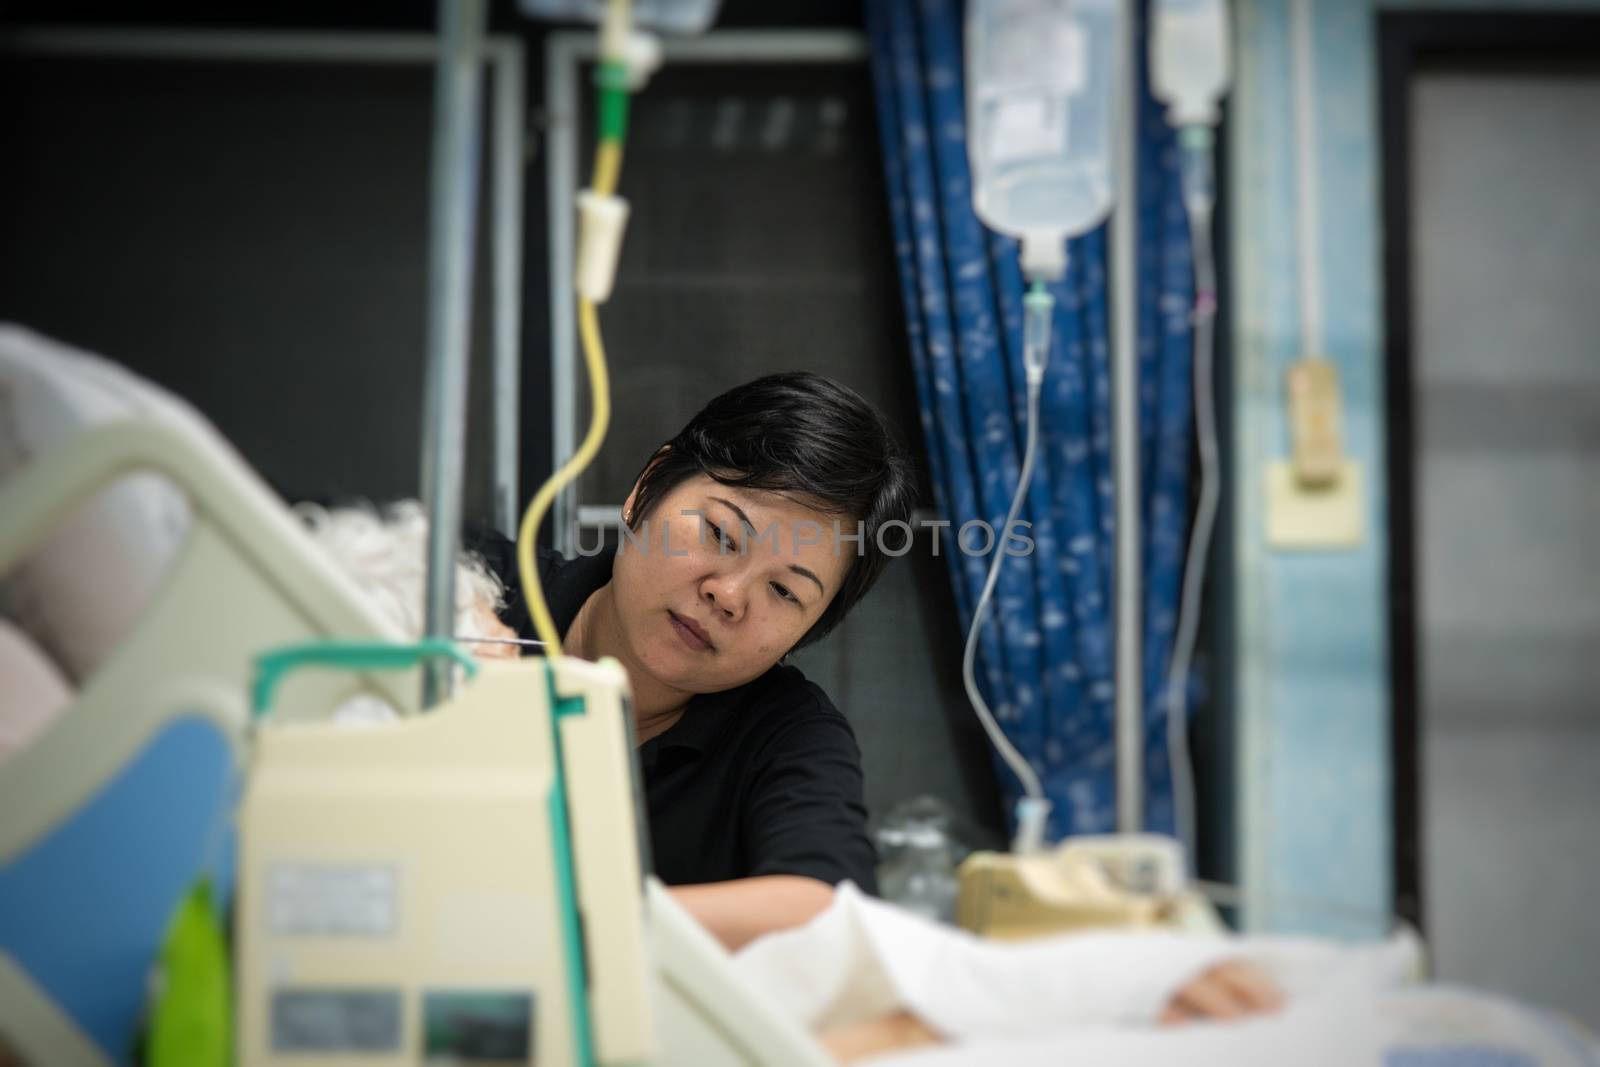 Patient relative taking care of the elder patient by PongMoji